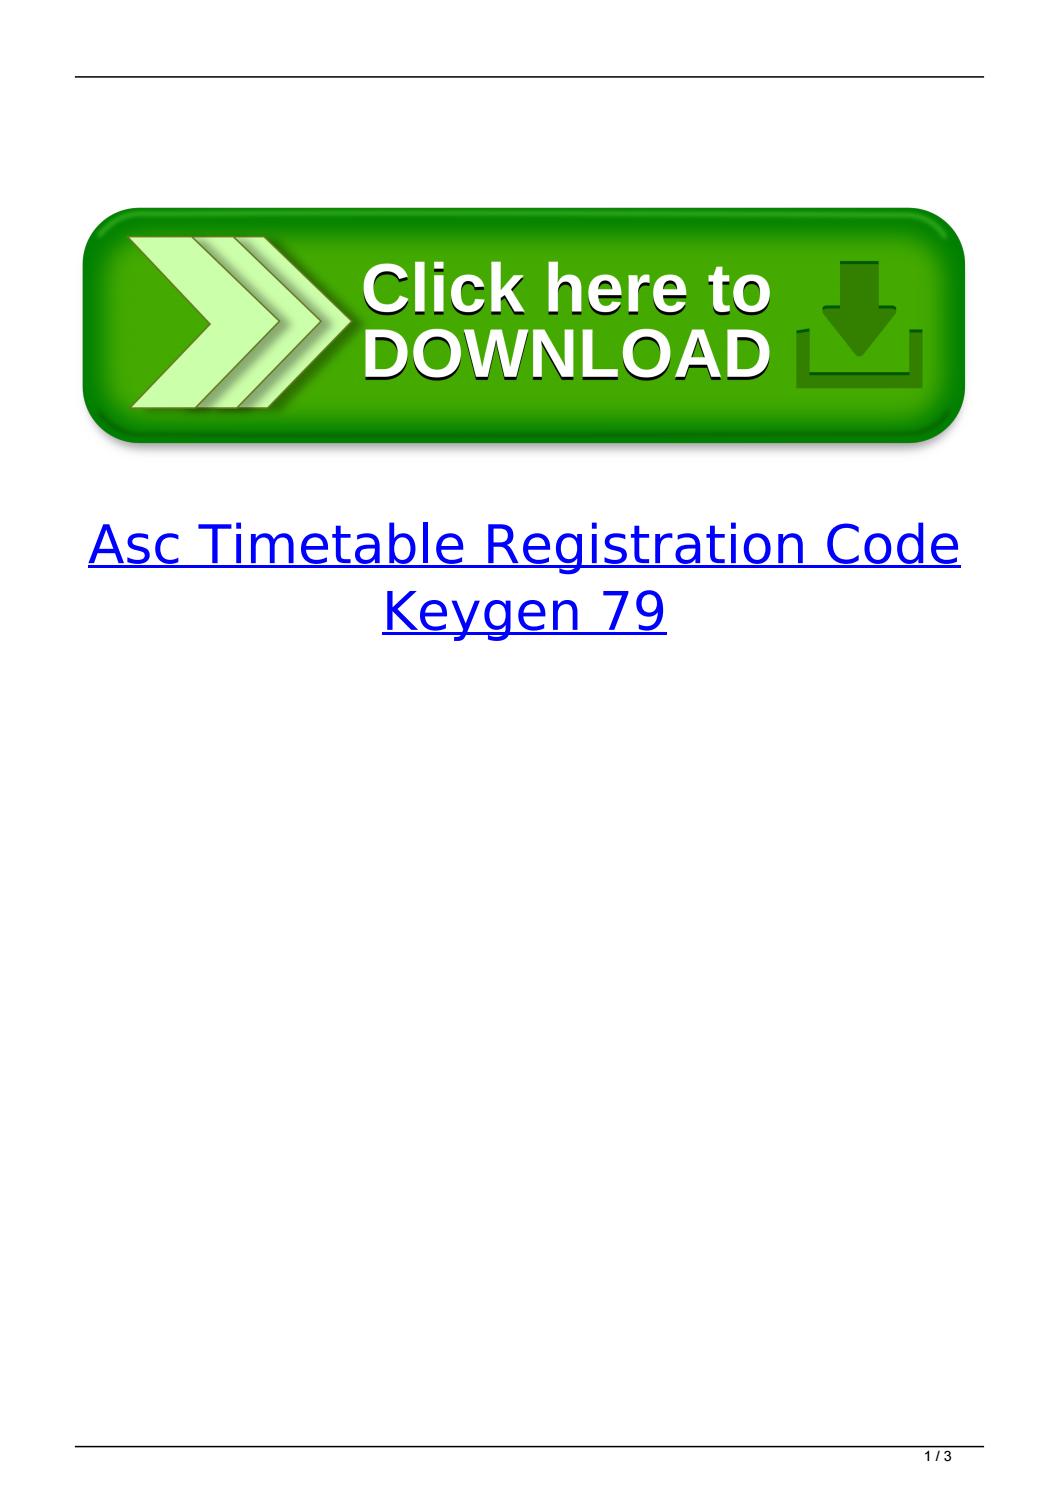 Asc timetables crack